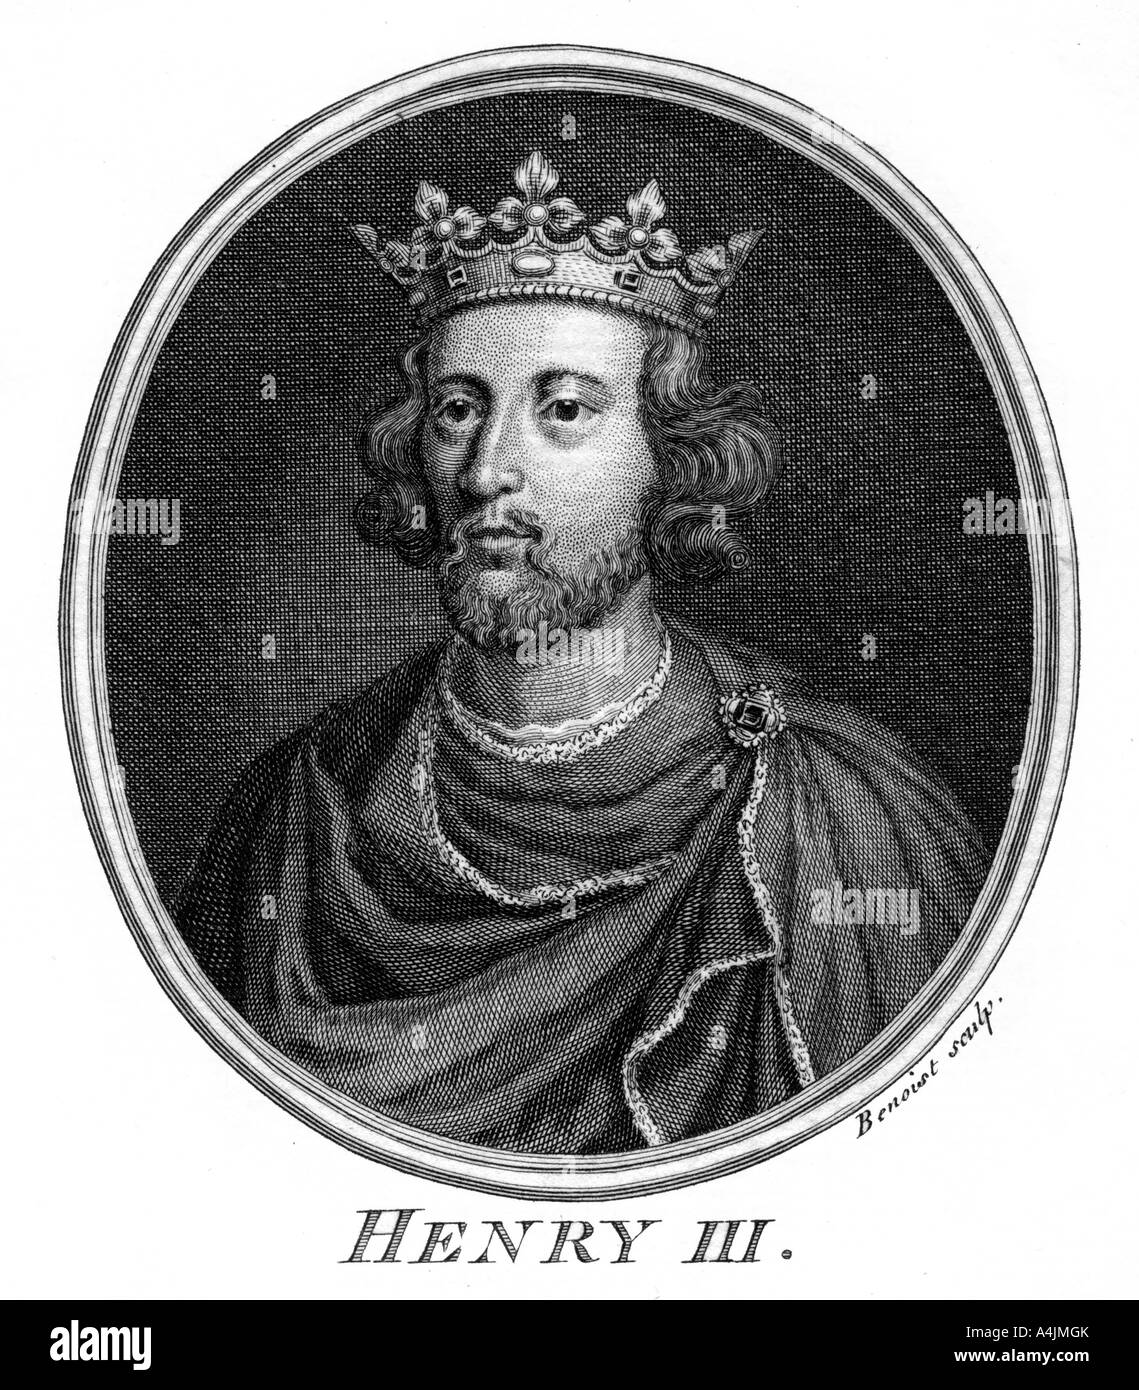 Enrico III, re d'Inghilterra.Artista: Benoist Foto Stock